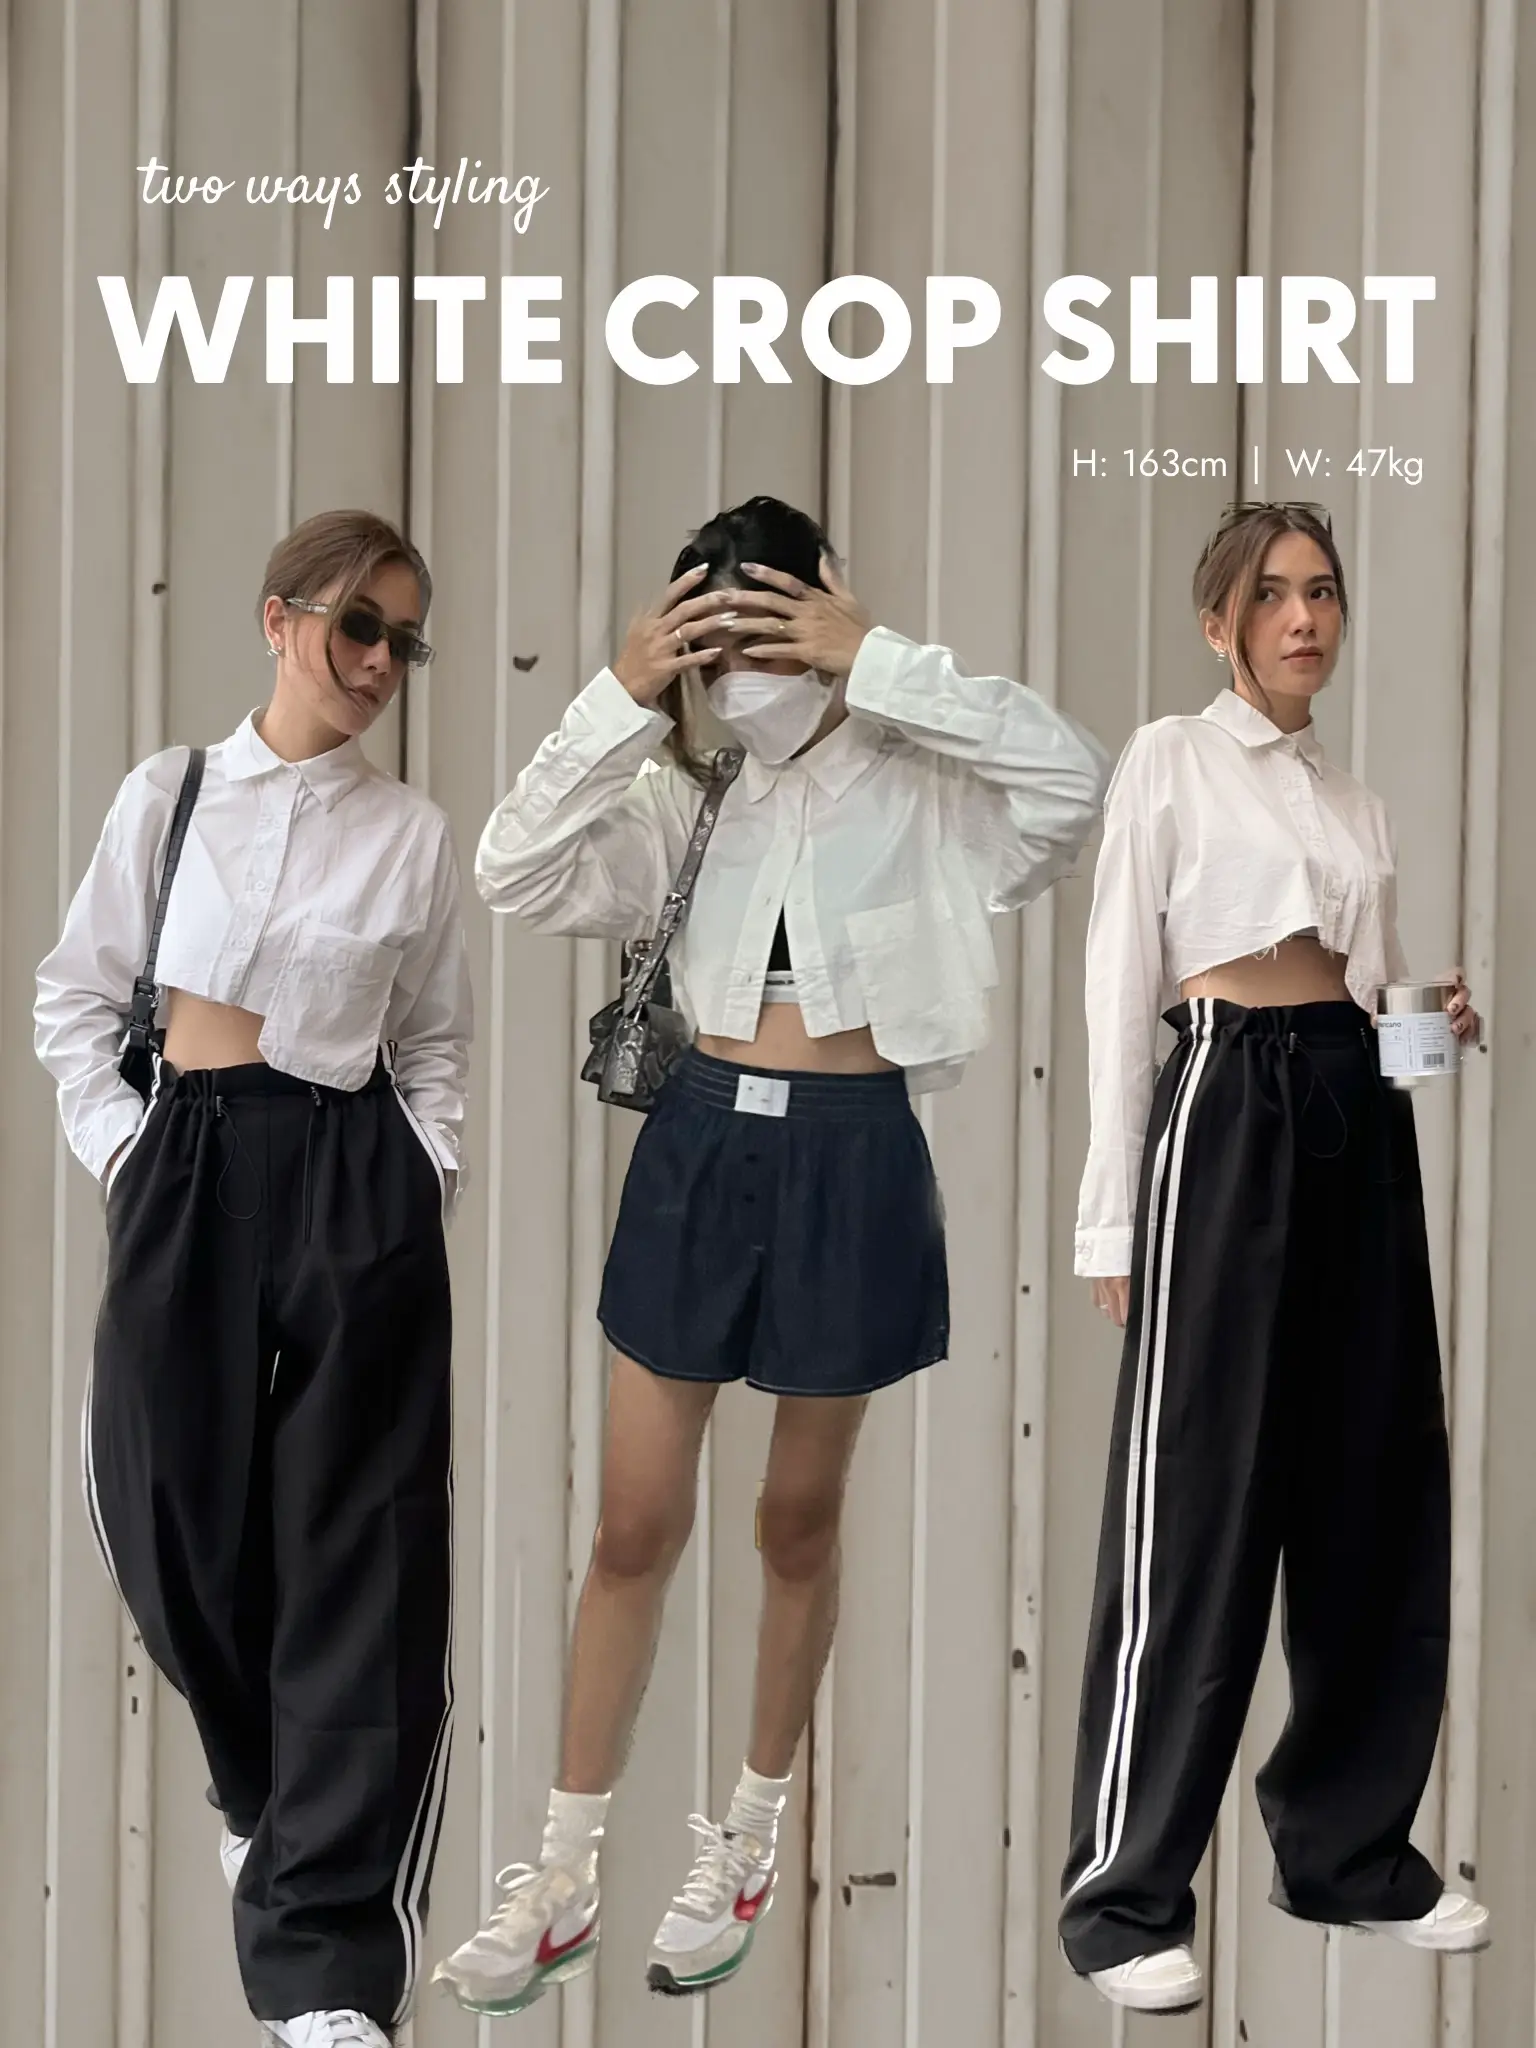 3 Ways To Crop Shirt Without Cutting It